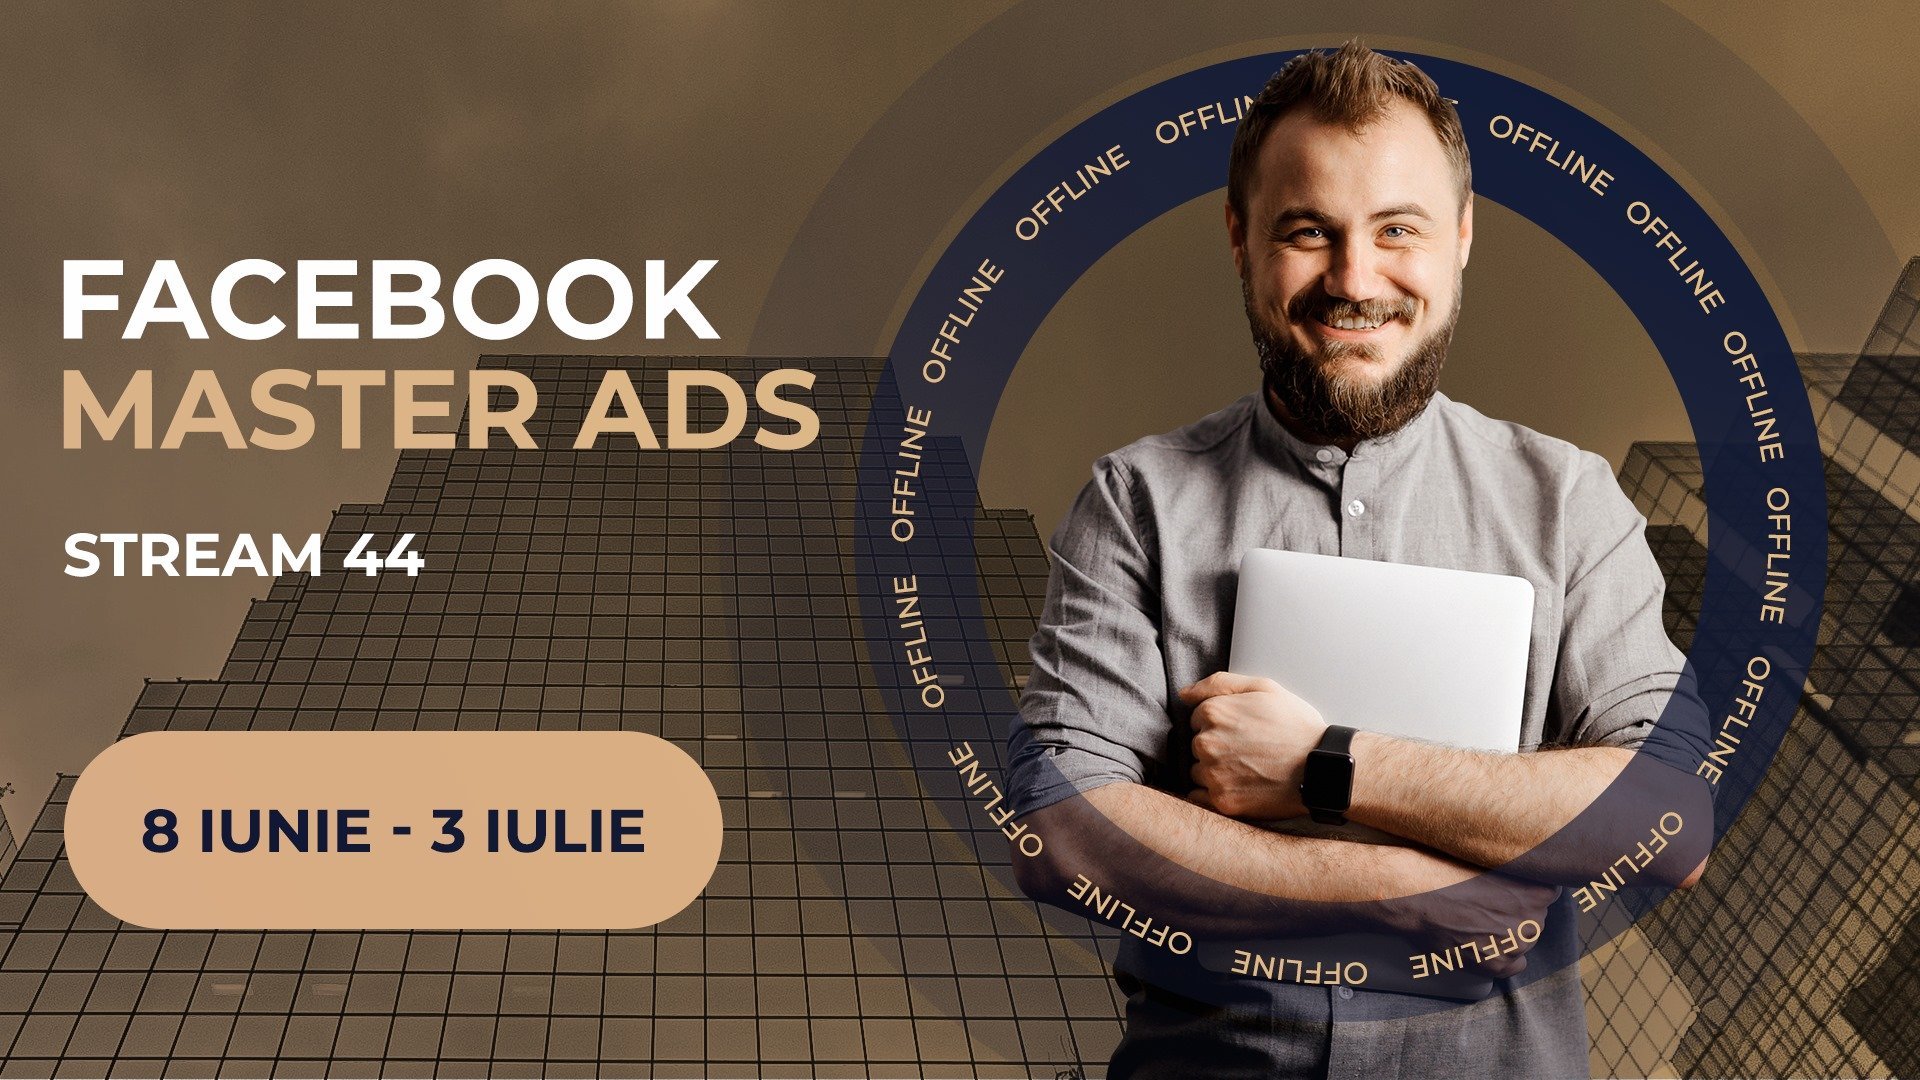 Curs setare reclame | Facebook Master Ads offline / Stream 44